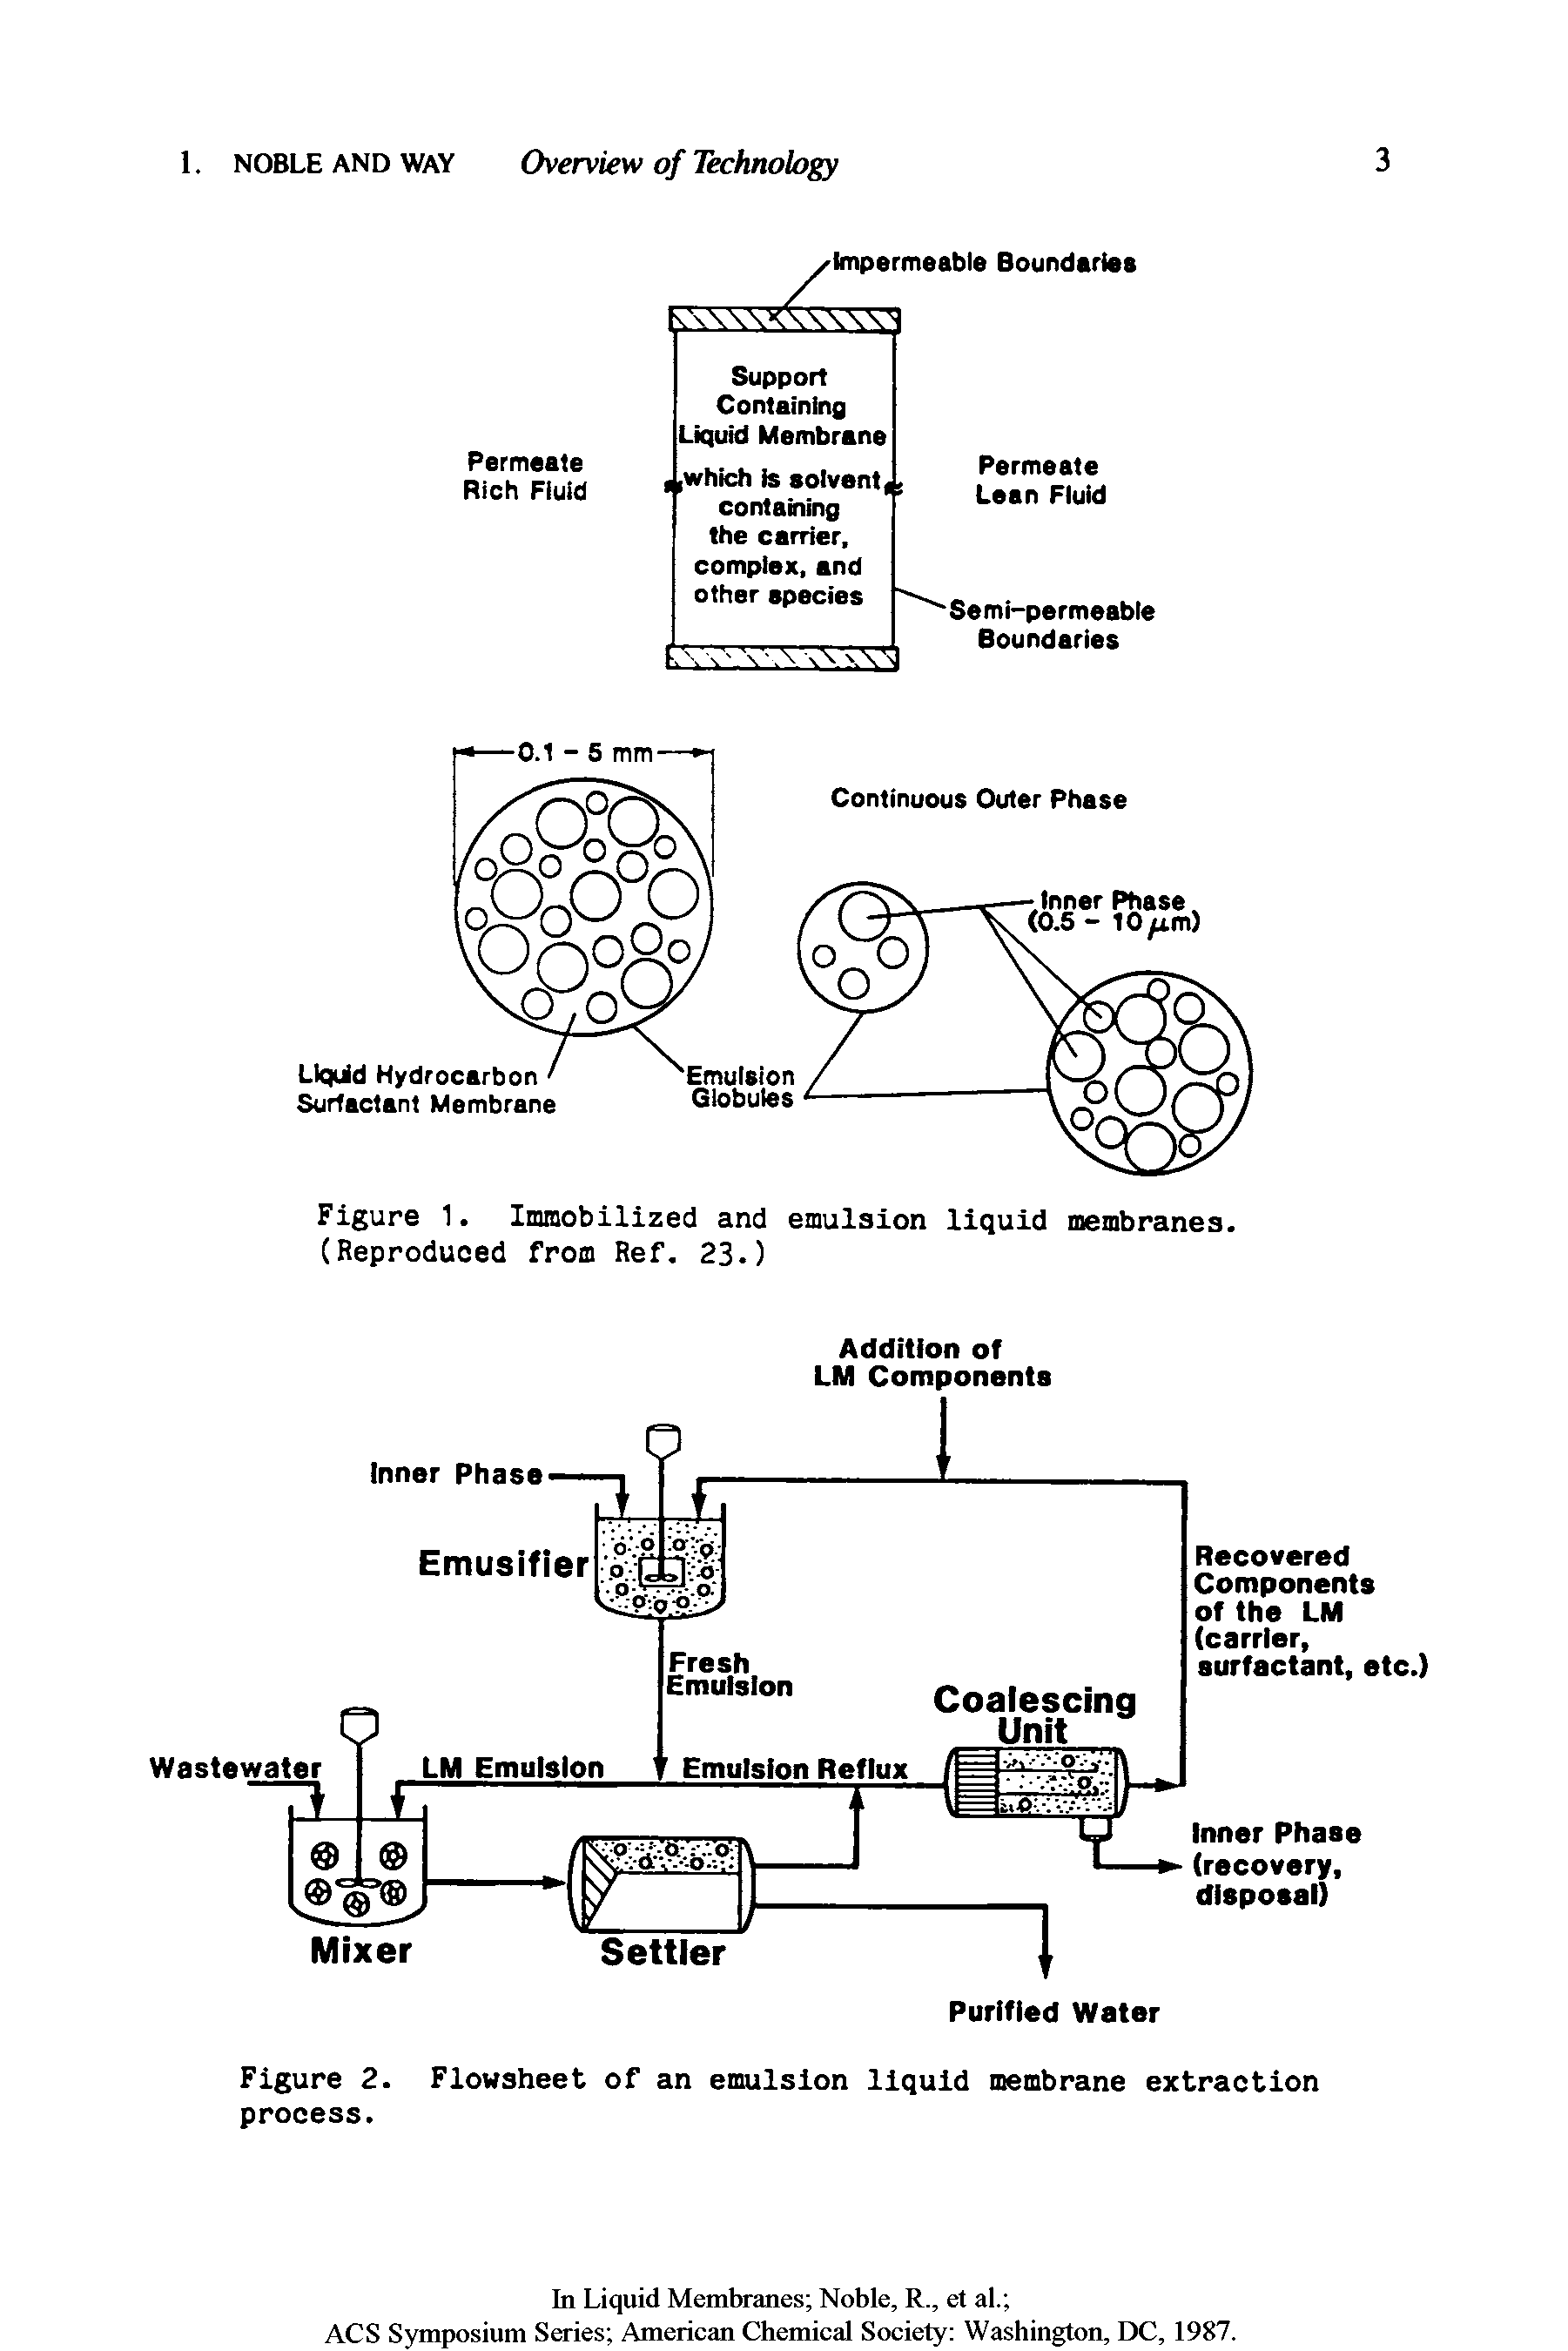 Figure 2. Flowsheet of an emulsion liquid membrane extraction process.